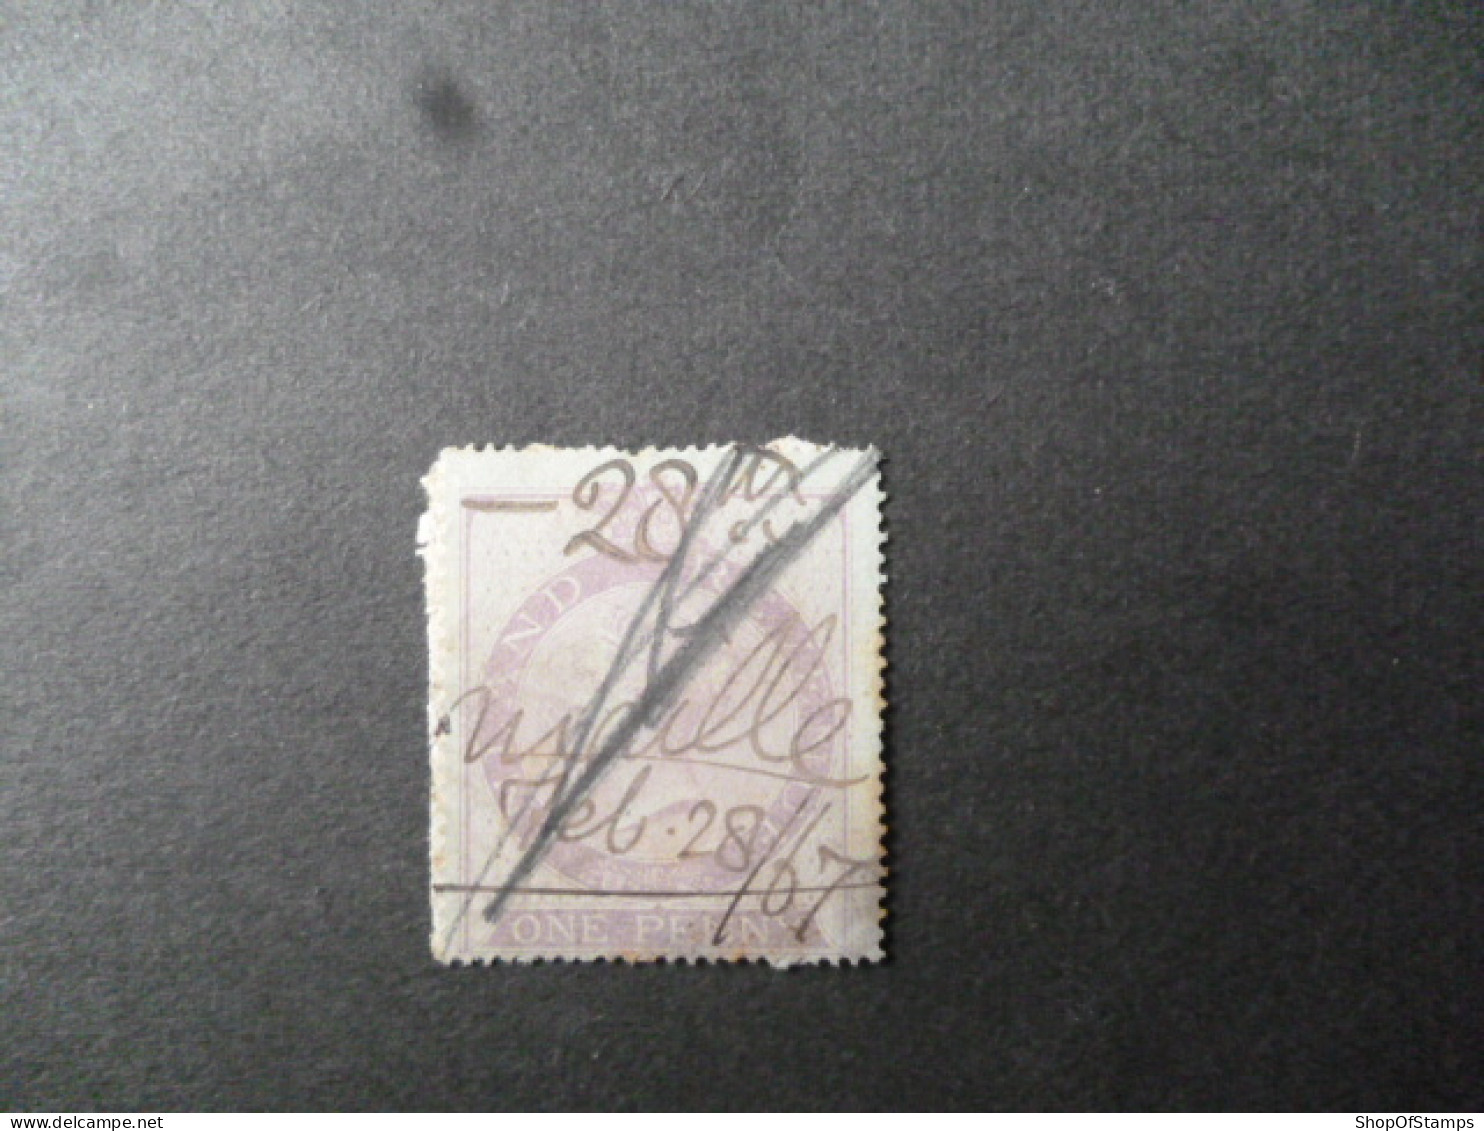 GREAT BRITAIN REVENUE USED DATE 1867 - Revenue Stamps